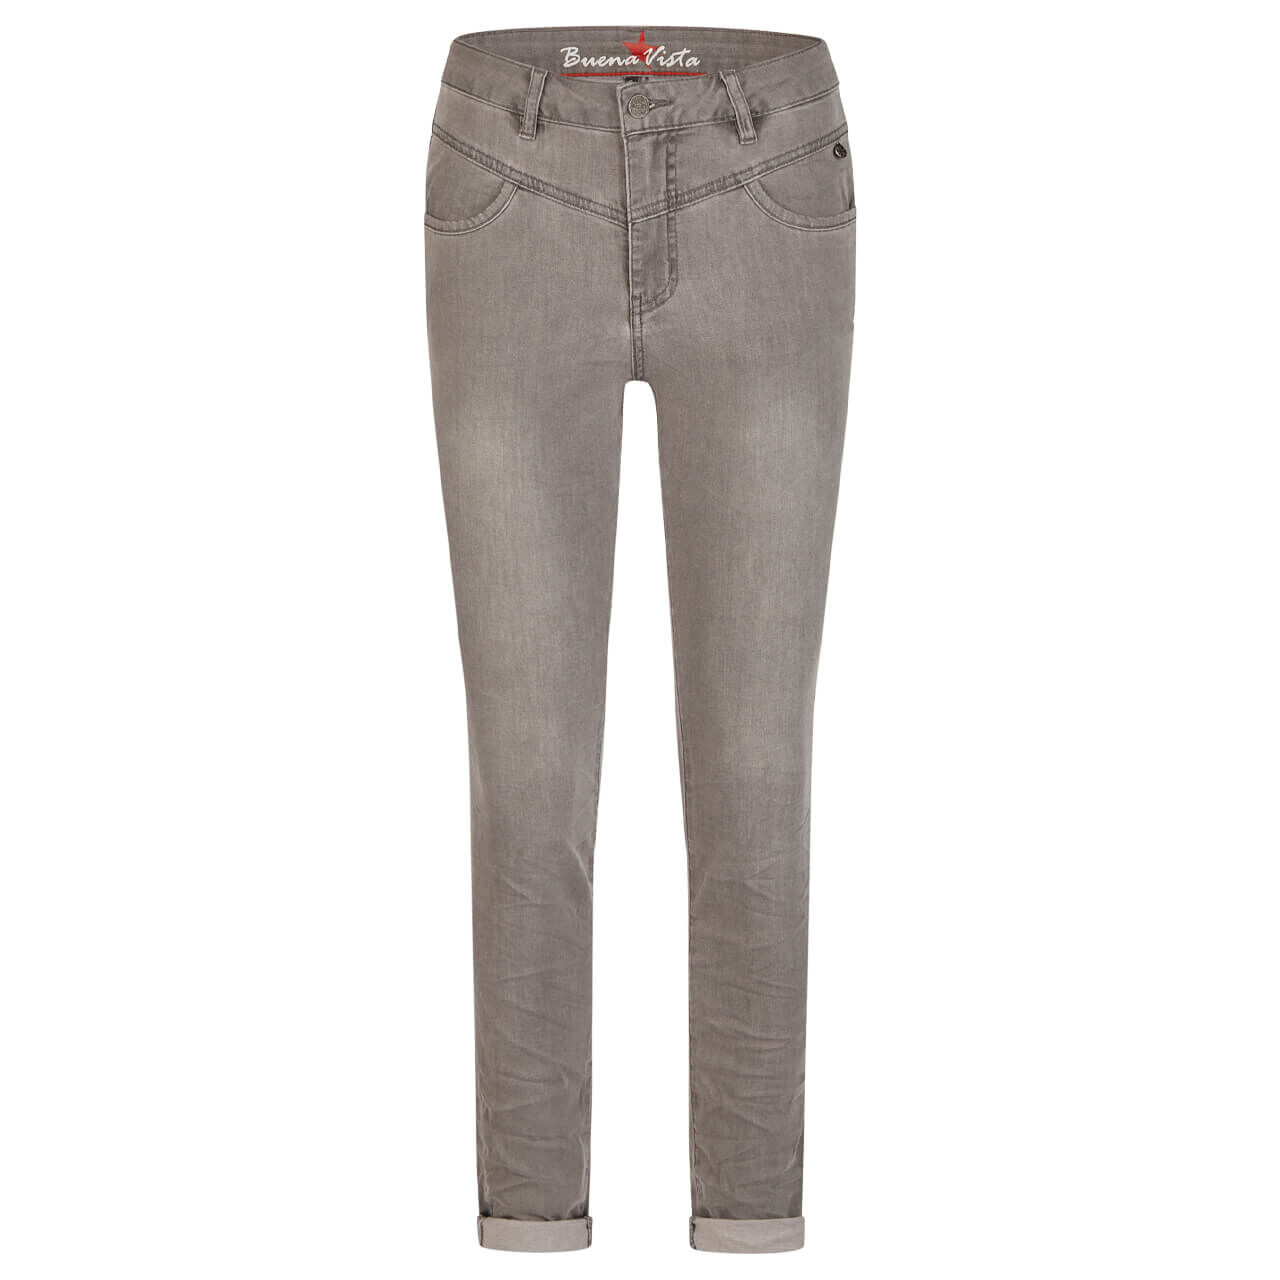 Buena Vista Jeans Florida-B Cozy Denim light grey